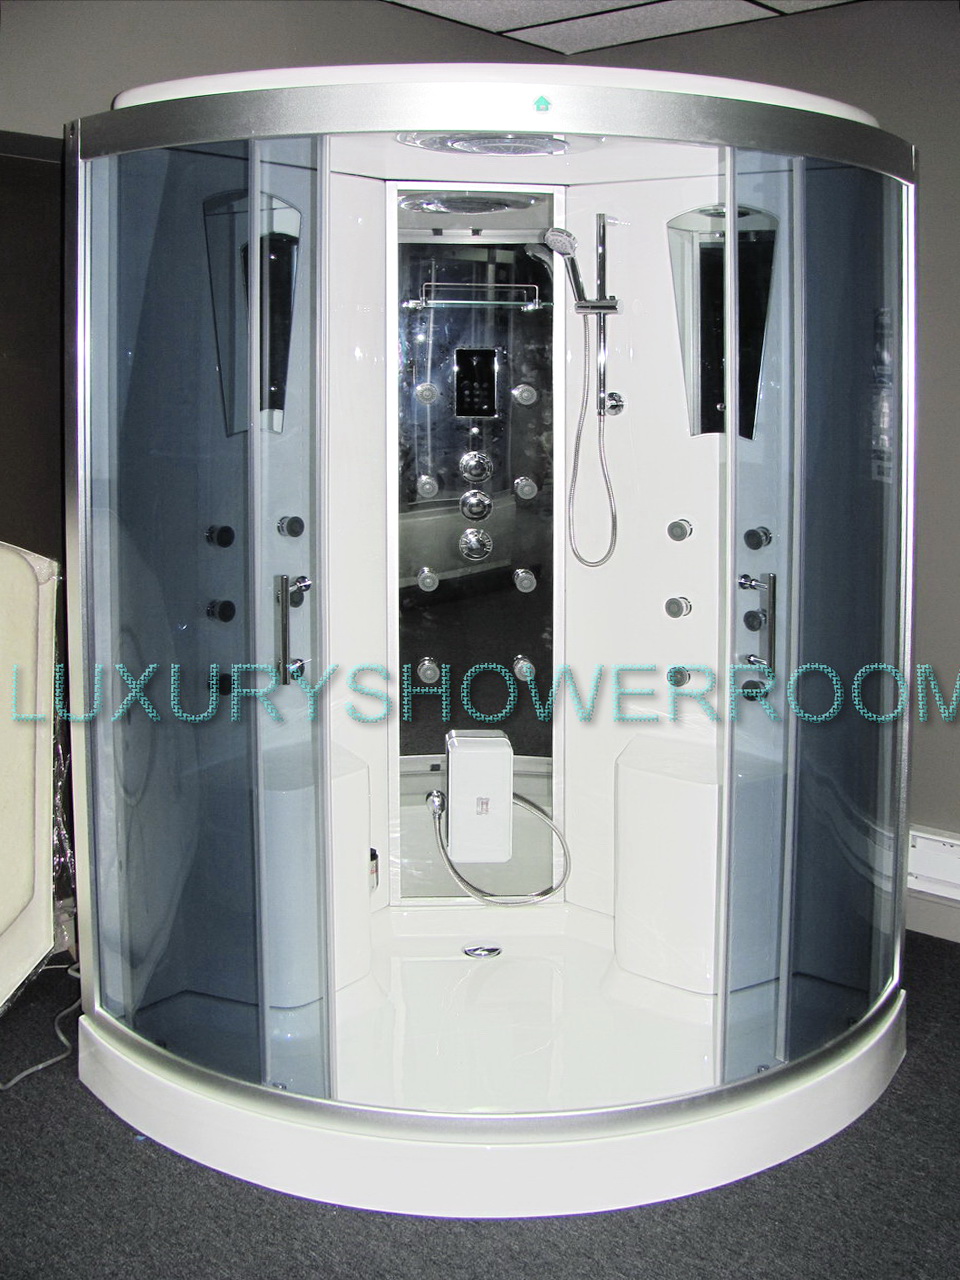 EMPIRESHOWER L90S26S-HD (HEAVY DUTY) STEAM SHOWER  48x48x85 - Image 1